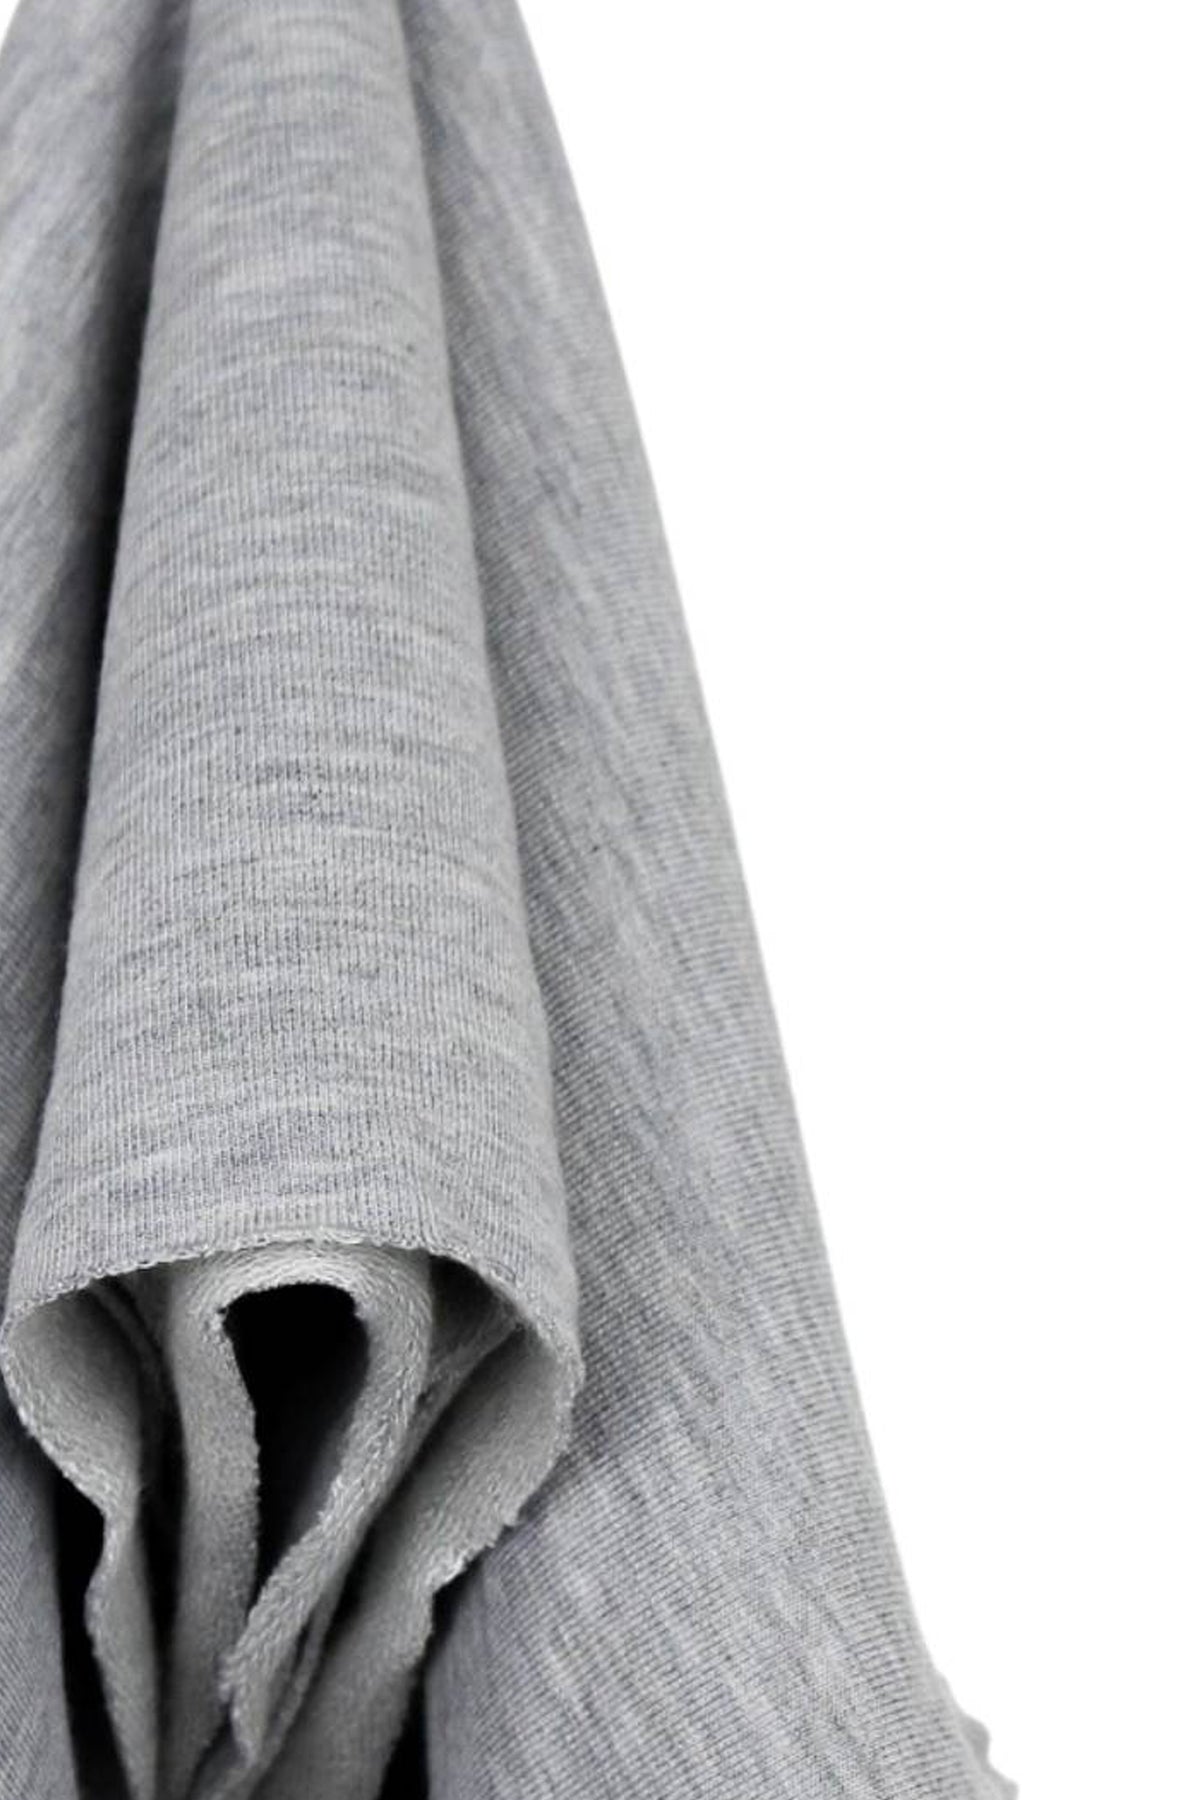 H&F Bamboo/Merino Wool Base Layer Pant – Hook & Fly Apparel